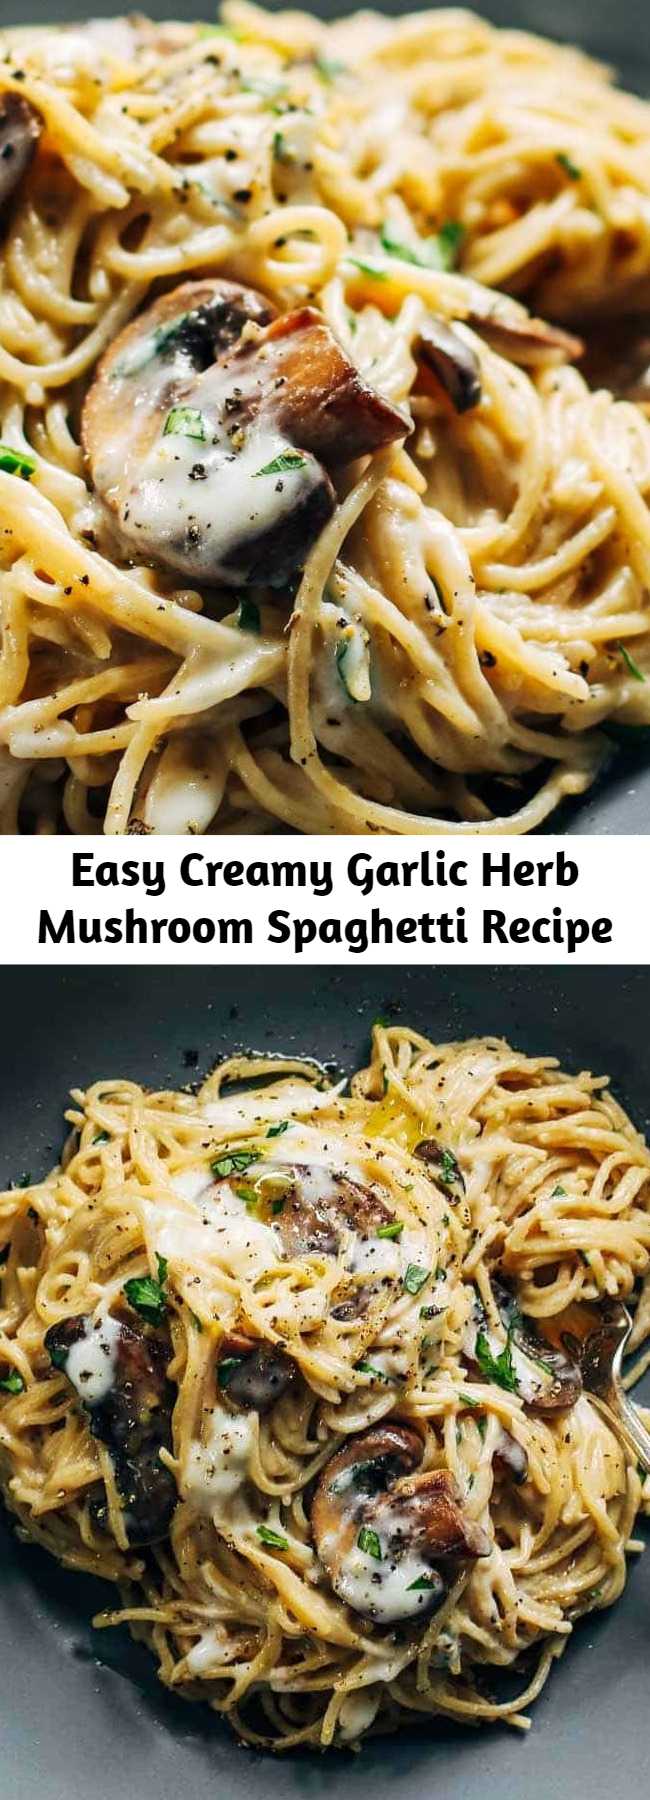 Easy Creamy Garlic Herb Mushroom Spaghetti Recipe - This Creamy Garlic Herb Mushroom Spaghetti is total comfort food! Simple ingredients, ready in about 30 minutes. Vegetarian. #pasta #sugarfree #vegetarian #healthy #dinner